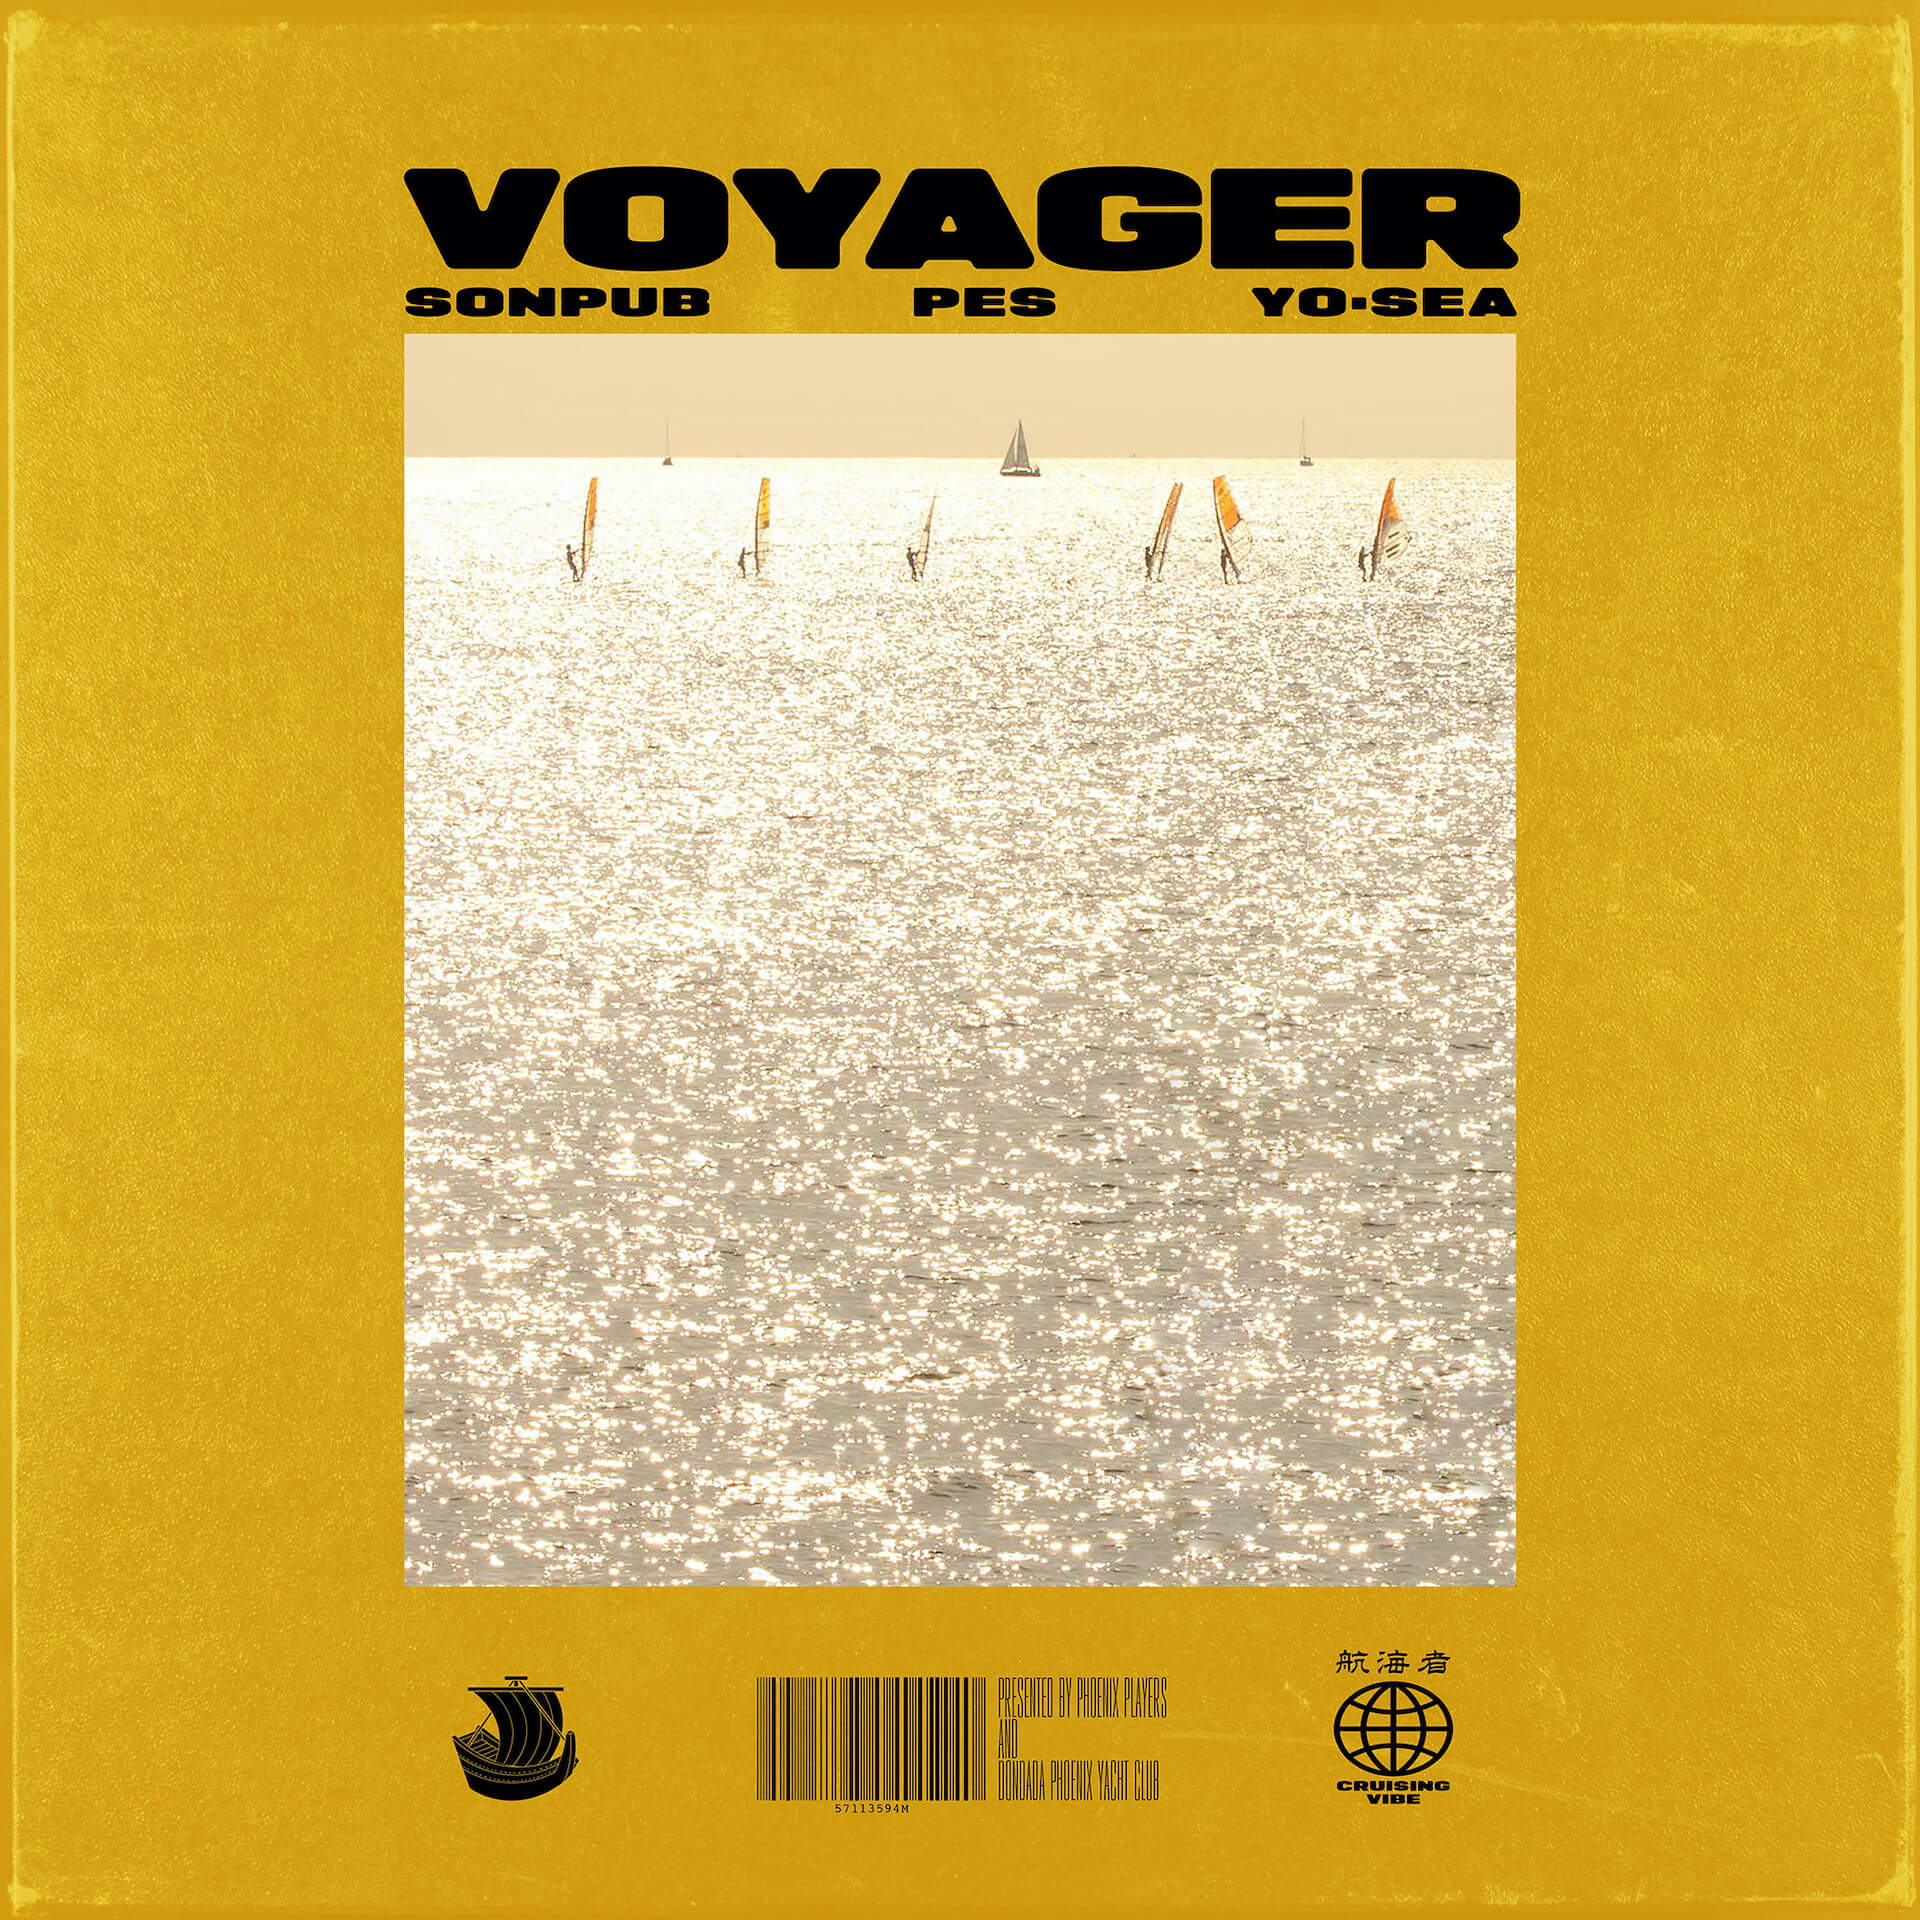 SONPUBが、PESとYo-Seaを迎えた楽曲“Voyager”をリリース！自身が監督を務めたMVも公開 music_210713_SONPUB3